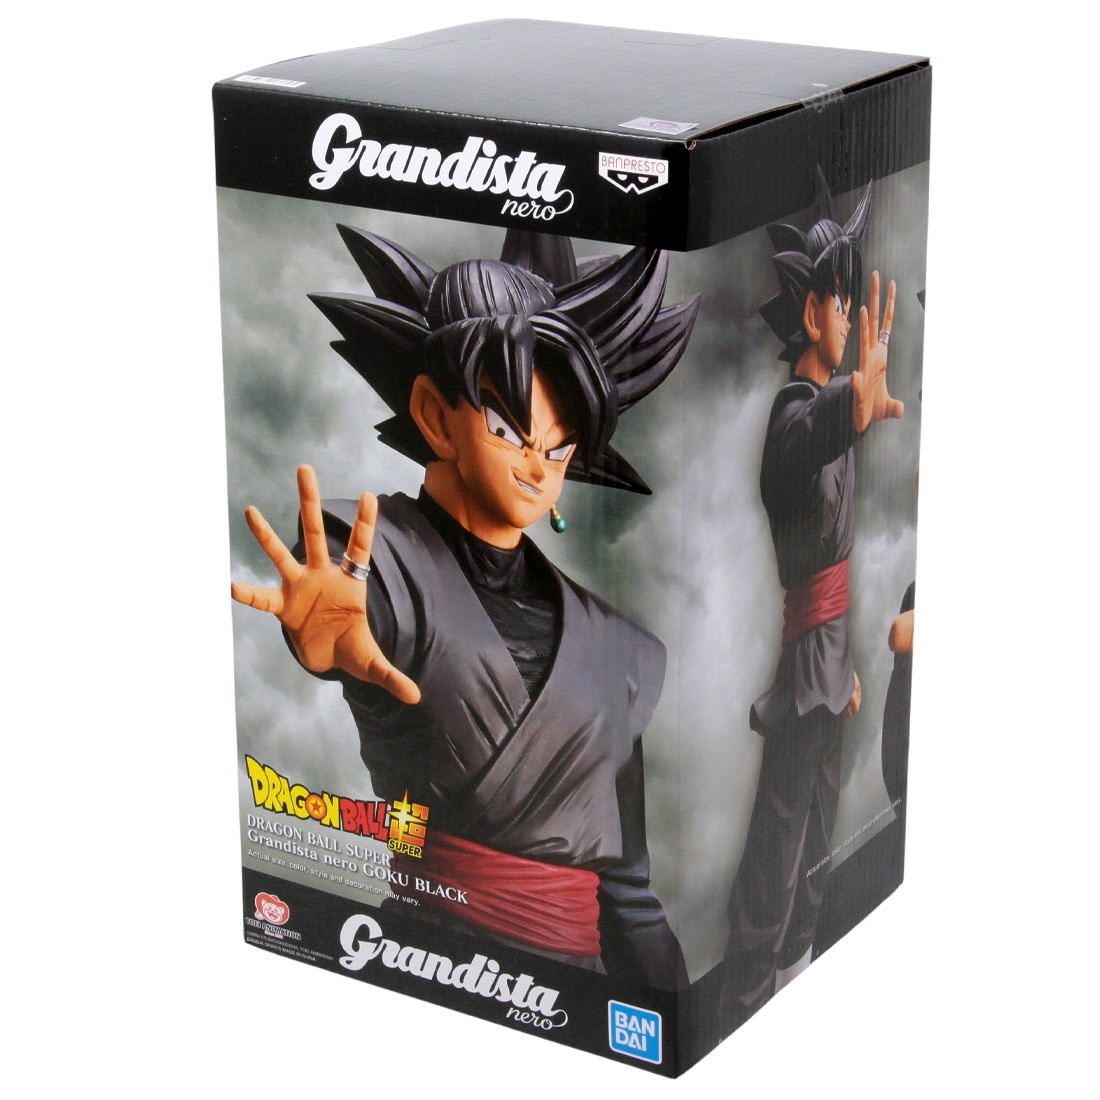 BanPresto - Dragon Ball Super Grandista nero Goku Black Figure